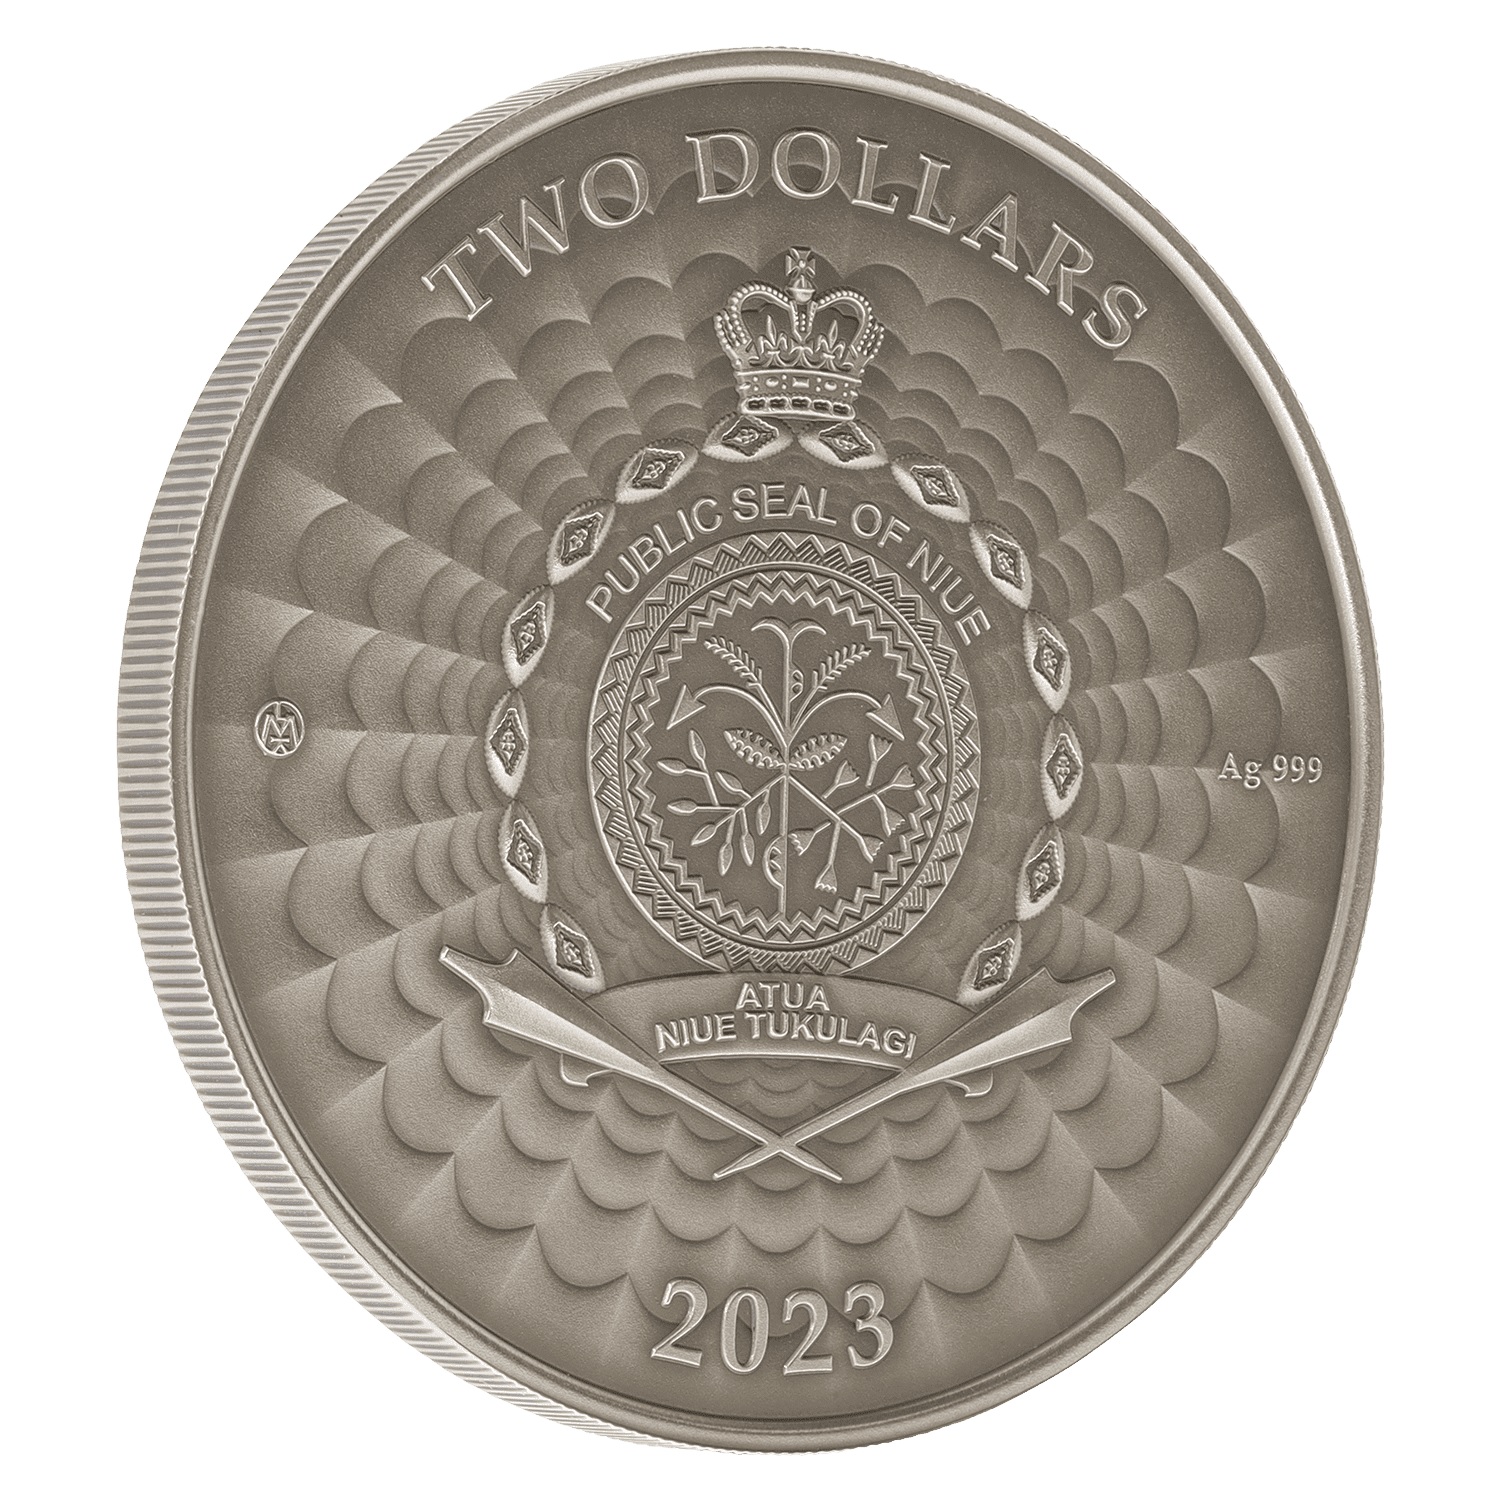 (W160.2.D.2023.15221669) Niue 2 Dollars Sasquatch 2023 - Antique silver Obverse (zoom)